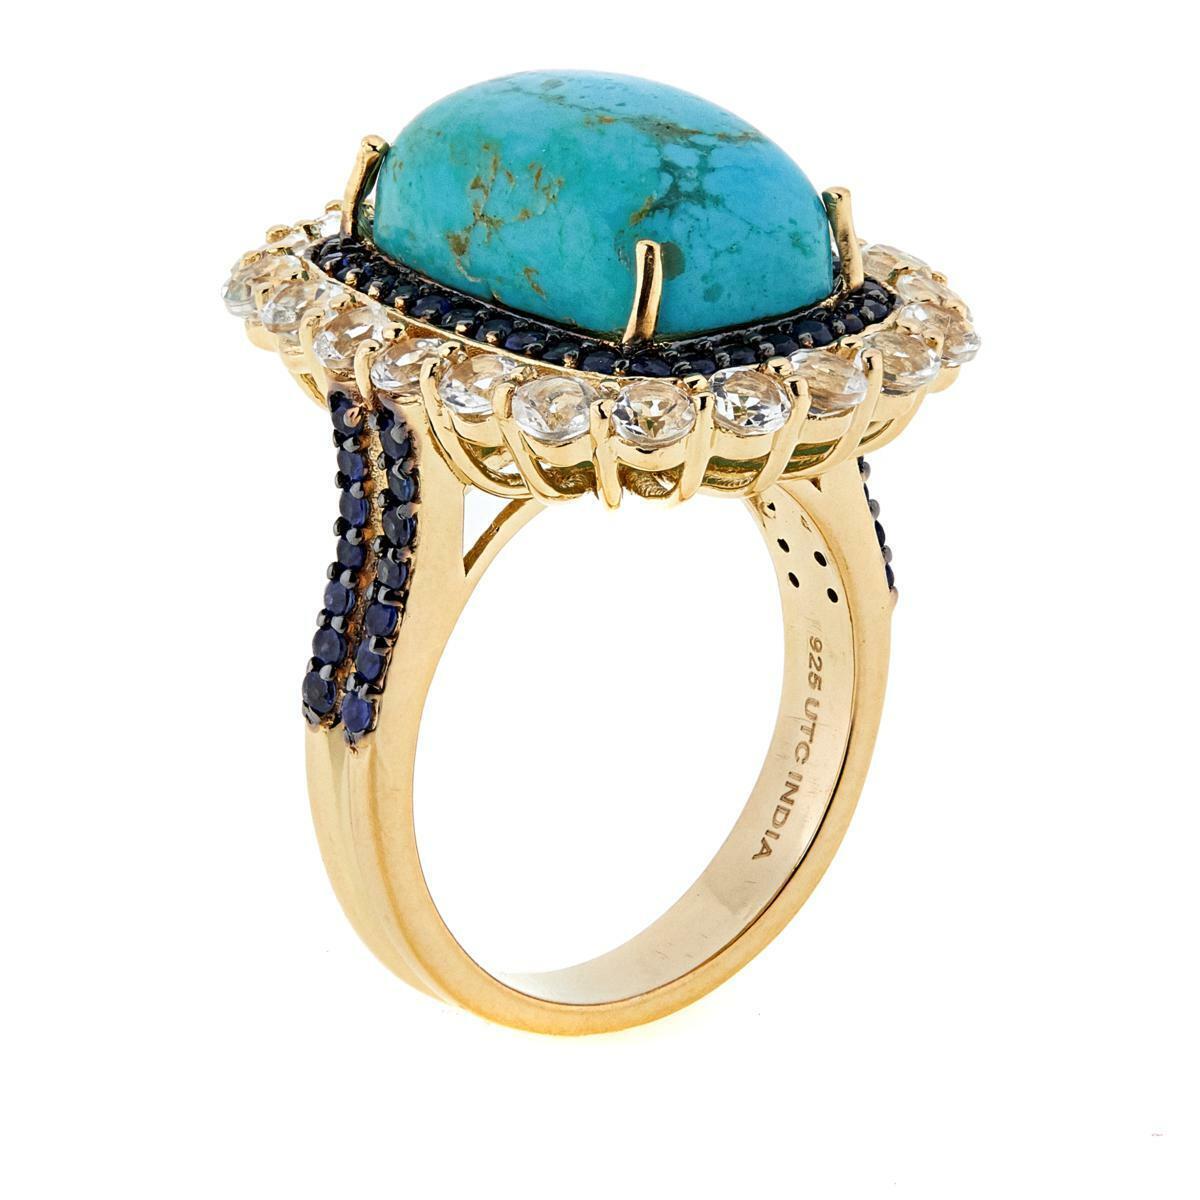 Paul Deasy Gem Kingman Turquoise, Sapphire And White Topaz Ring Size 9 Hsn $260